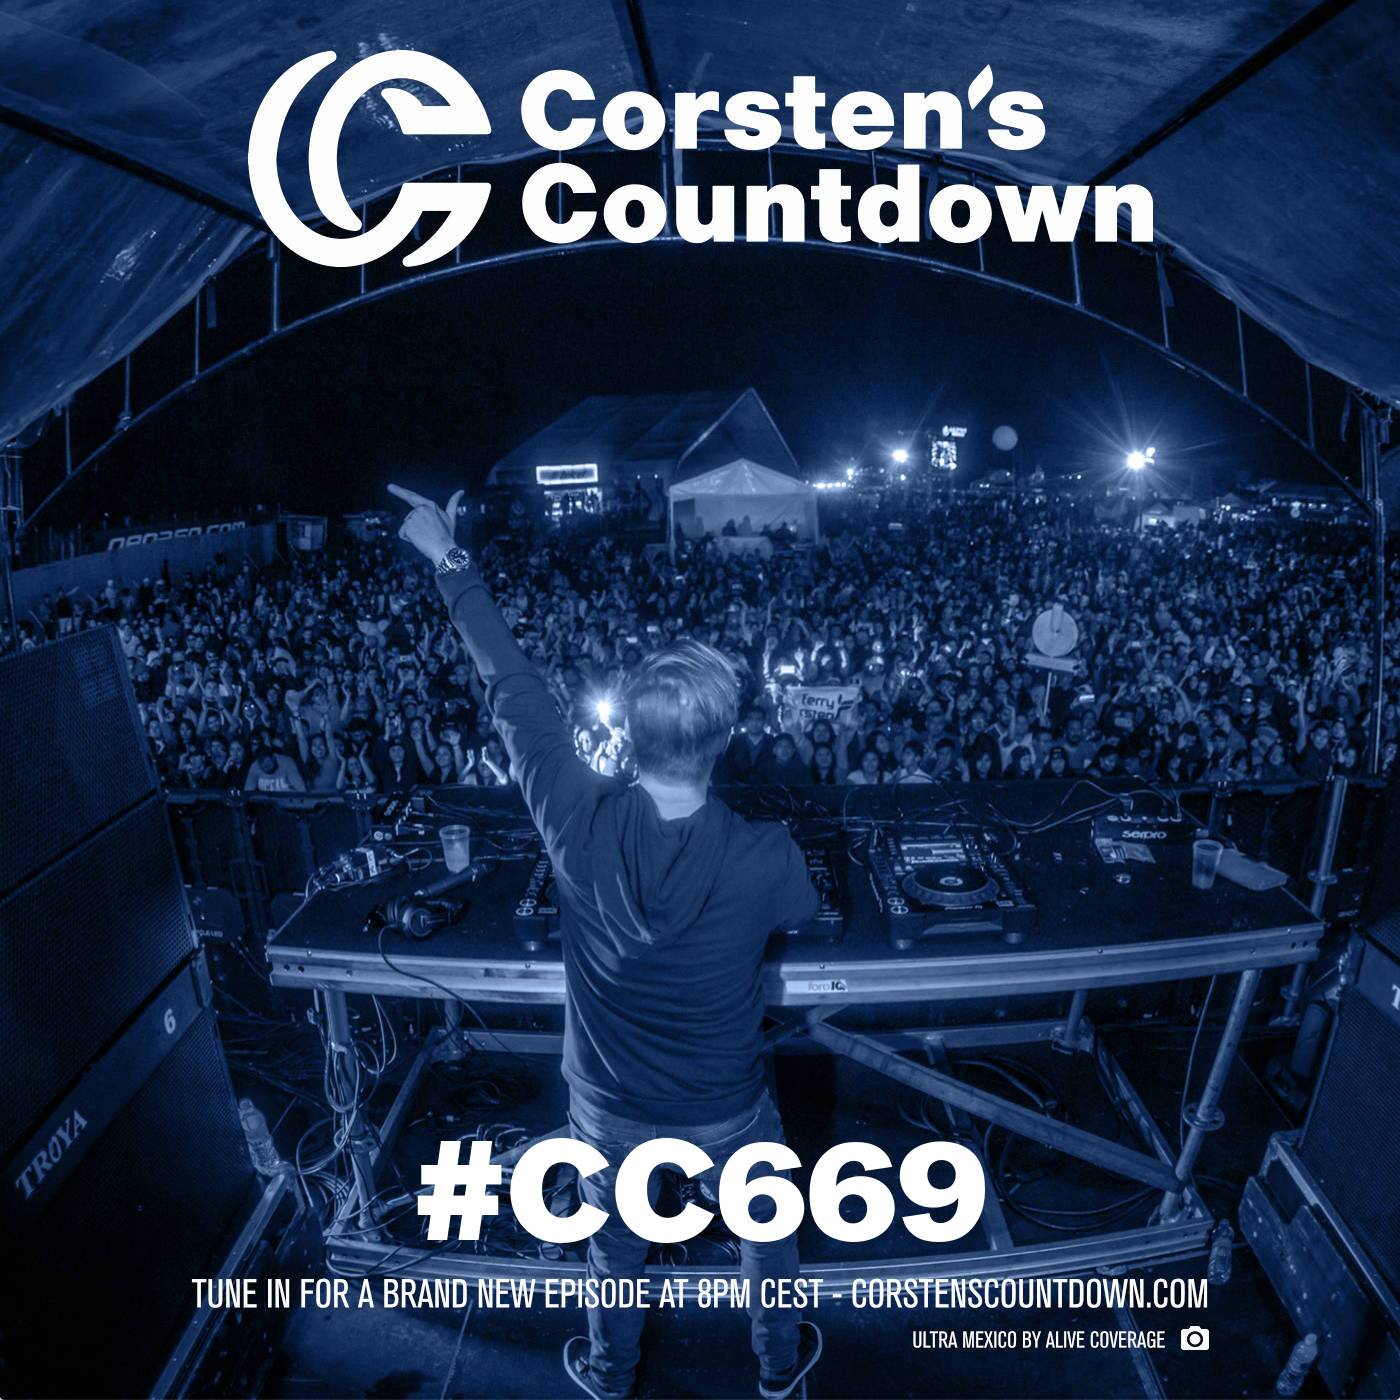 Corsten’s Countdown CC669